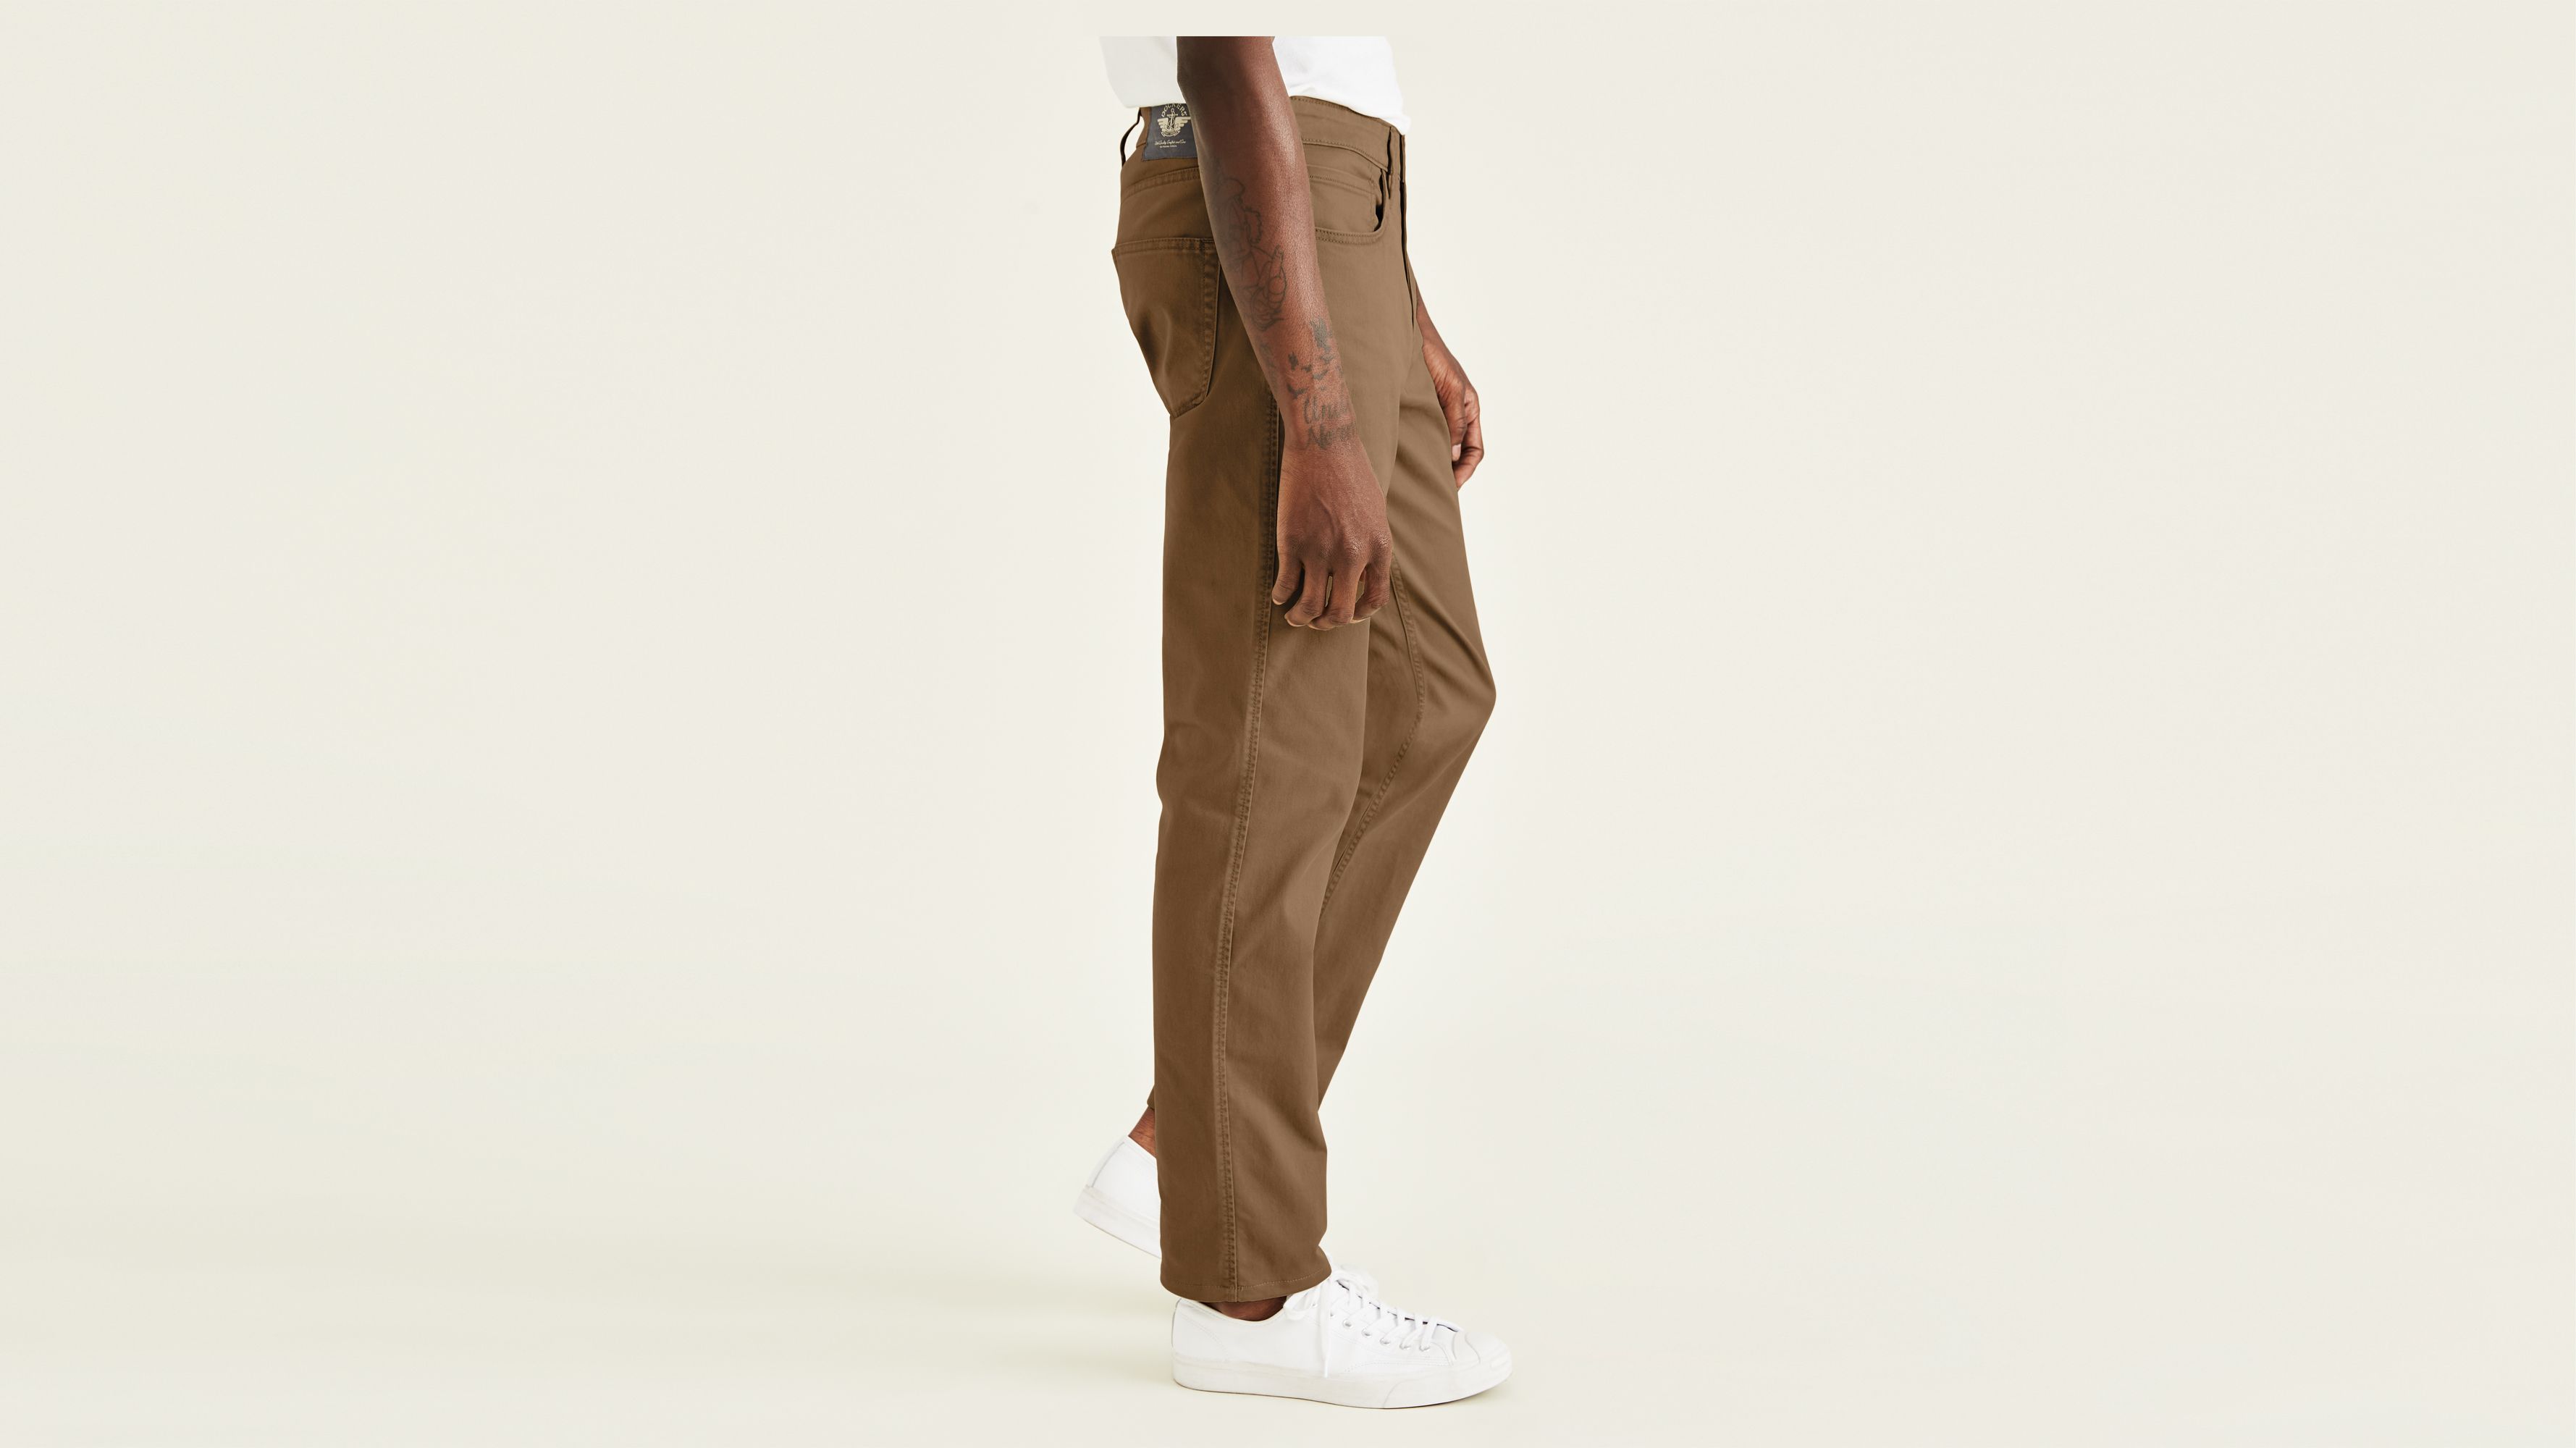 dockers jean cut straight fit pants